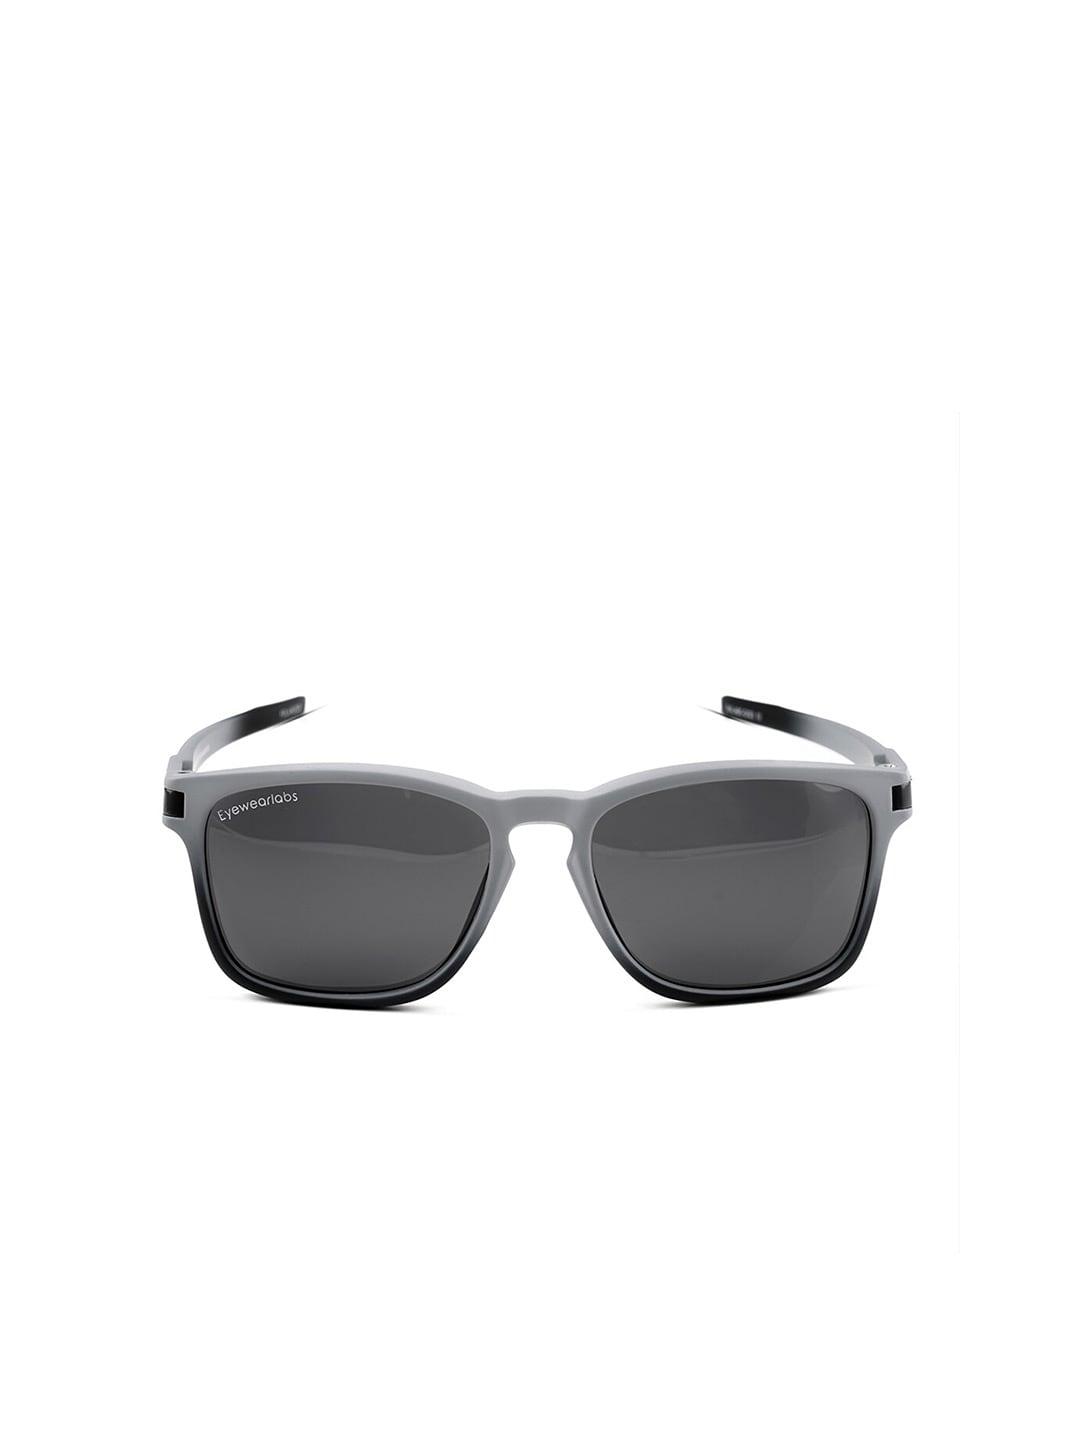 Eyewearlabs Wayfarer Sunglasses with Polarised and UV Protected Lens